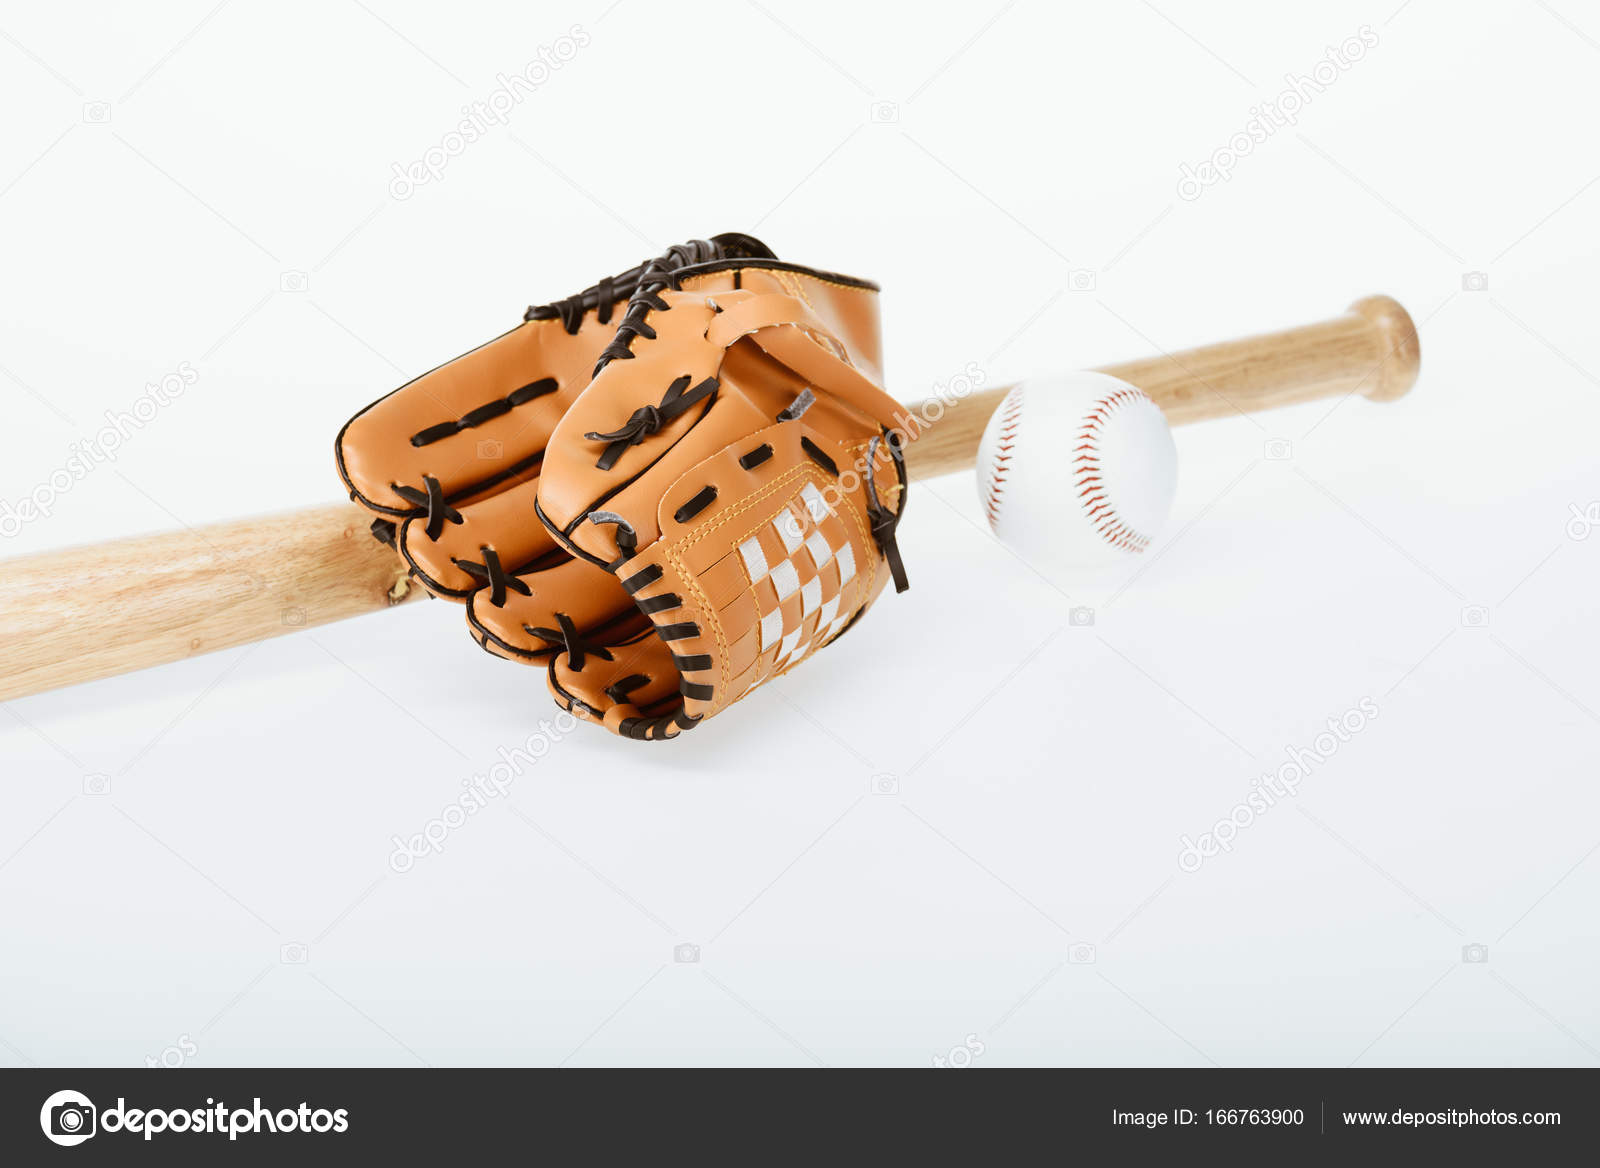 Guante, pelota y bate de béisbol - Foto de stock gratis © VadimVasenin